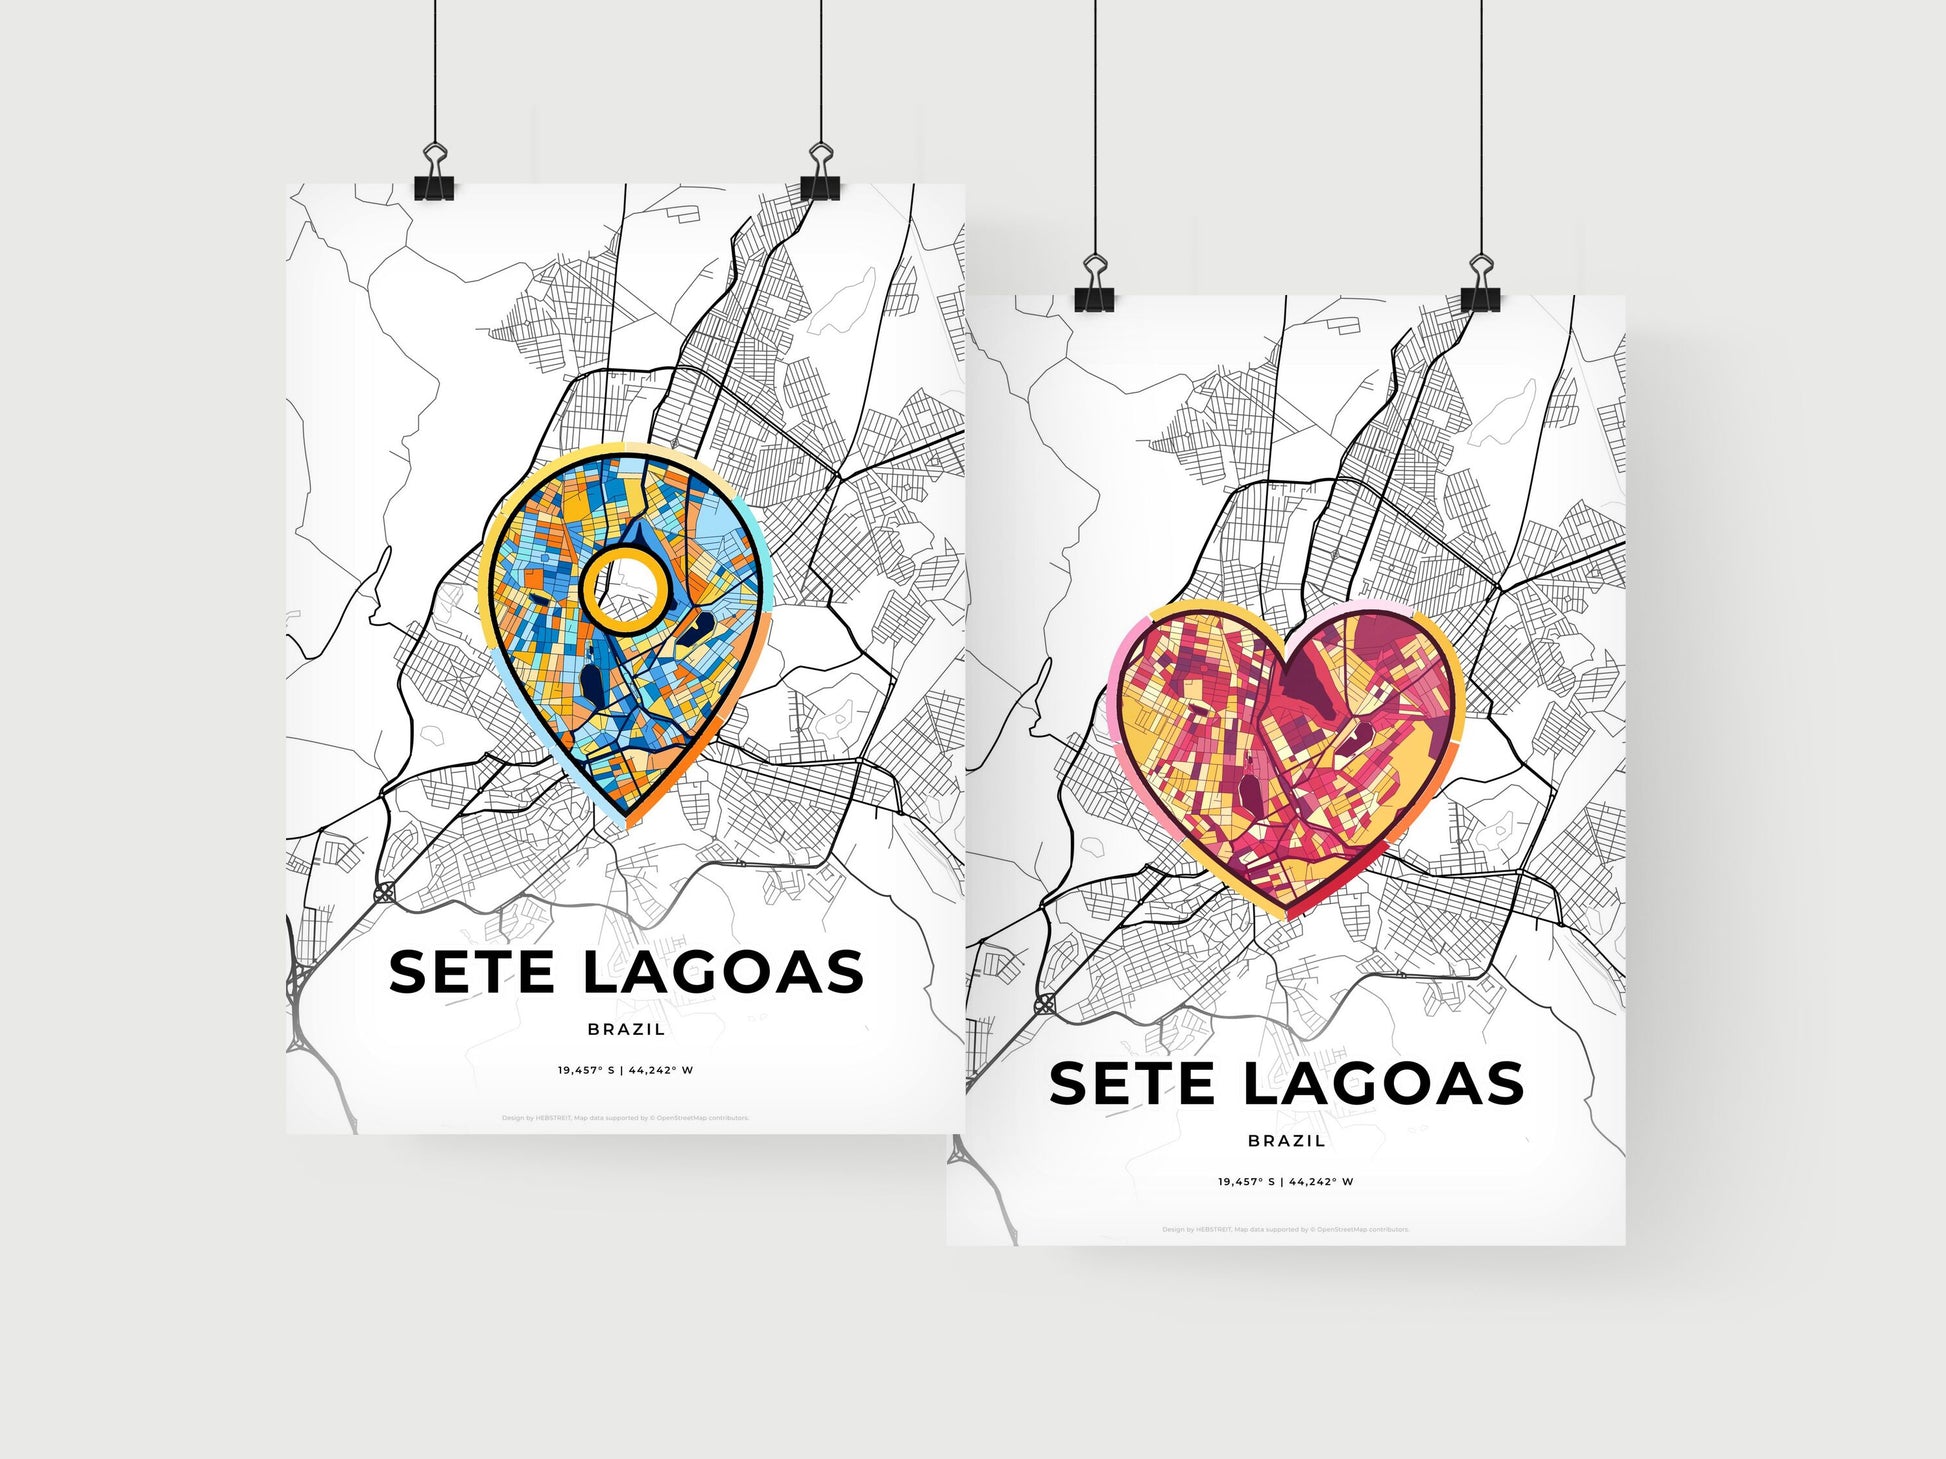 SETE LAGOAS BRAZIL minimal art map with a colorful icon.